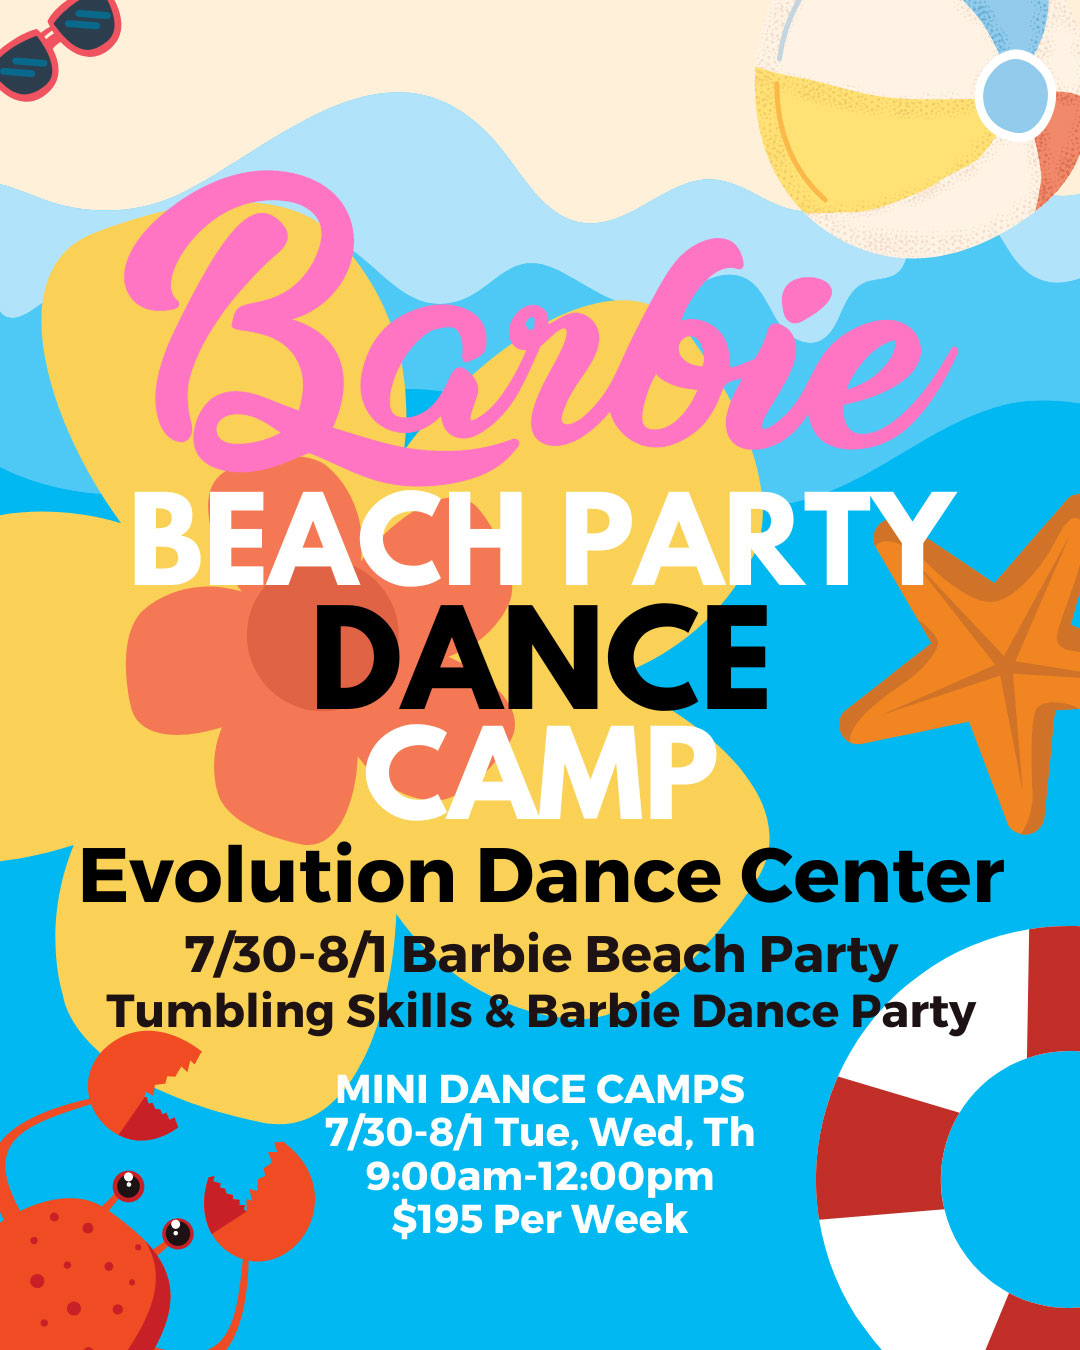 Barbie Beach Party Dance Camp flyer.